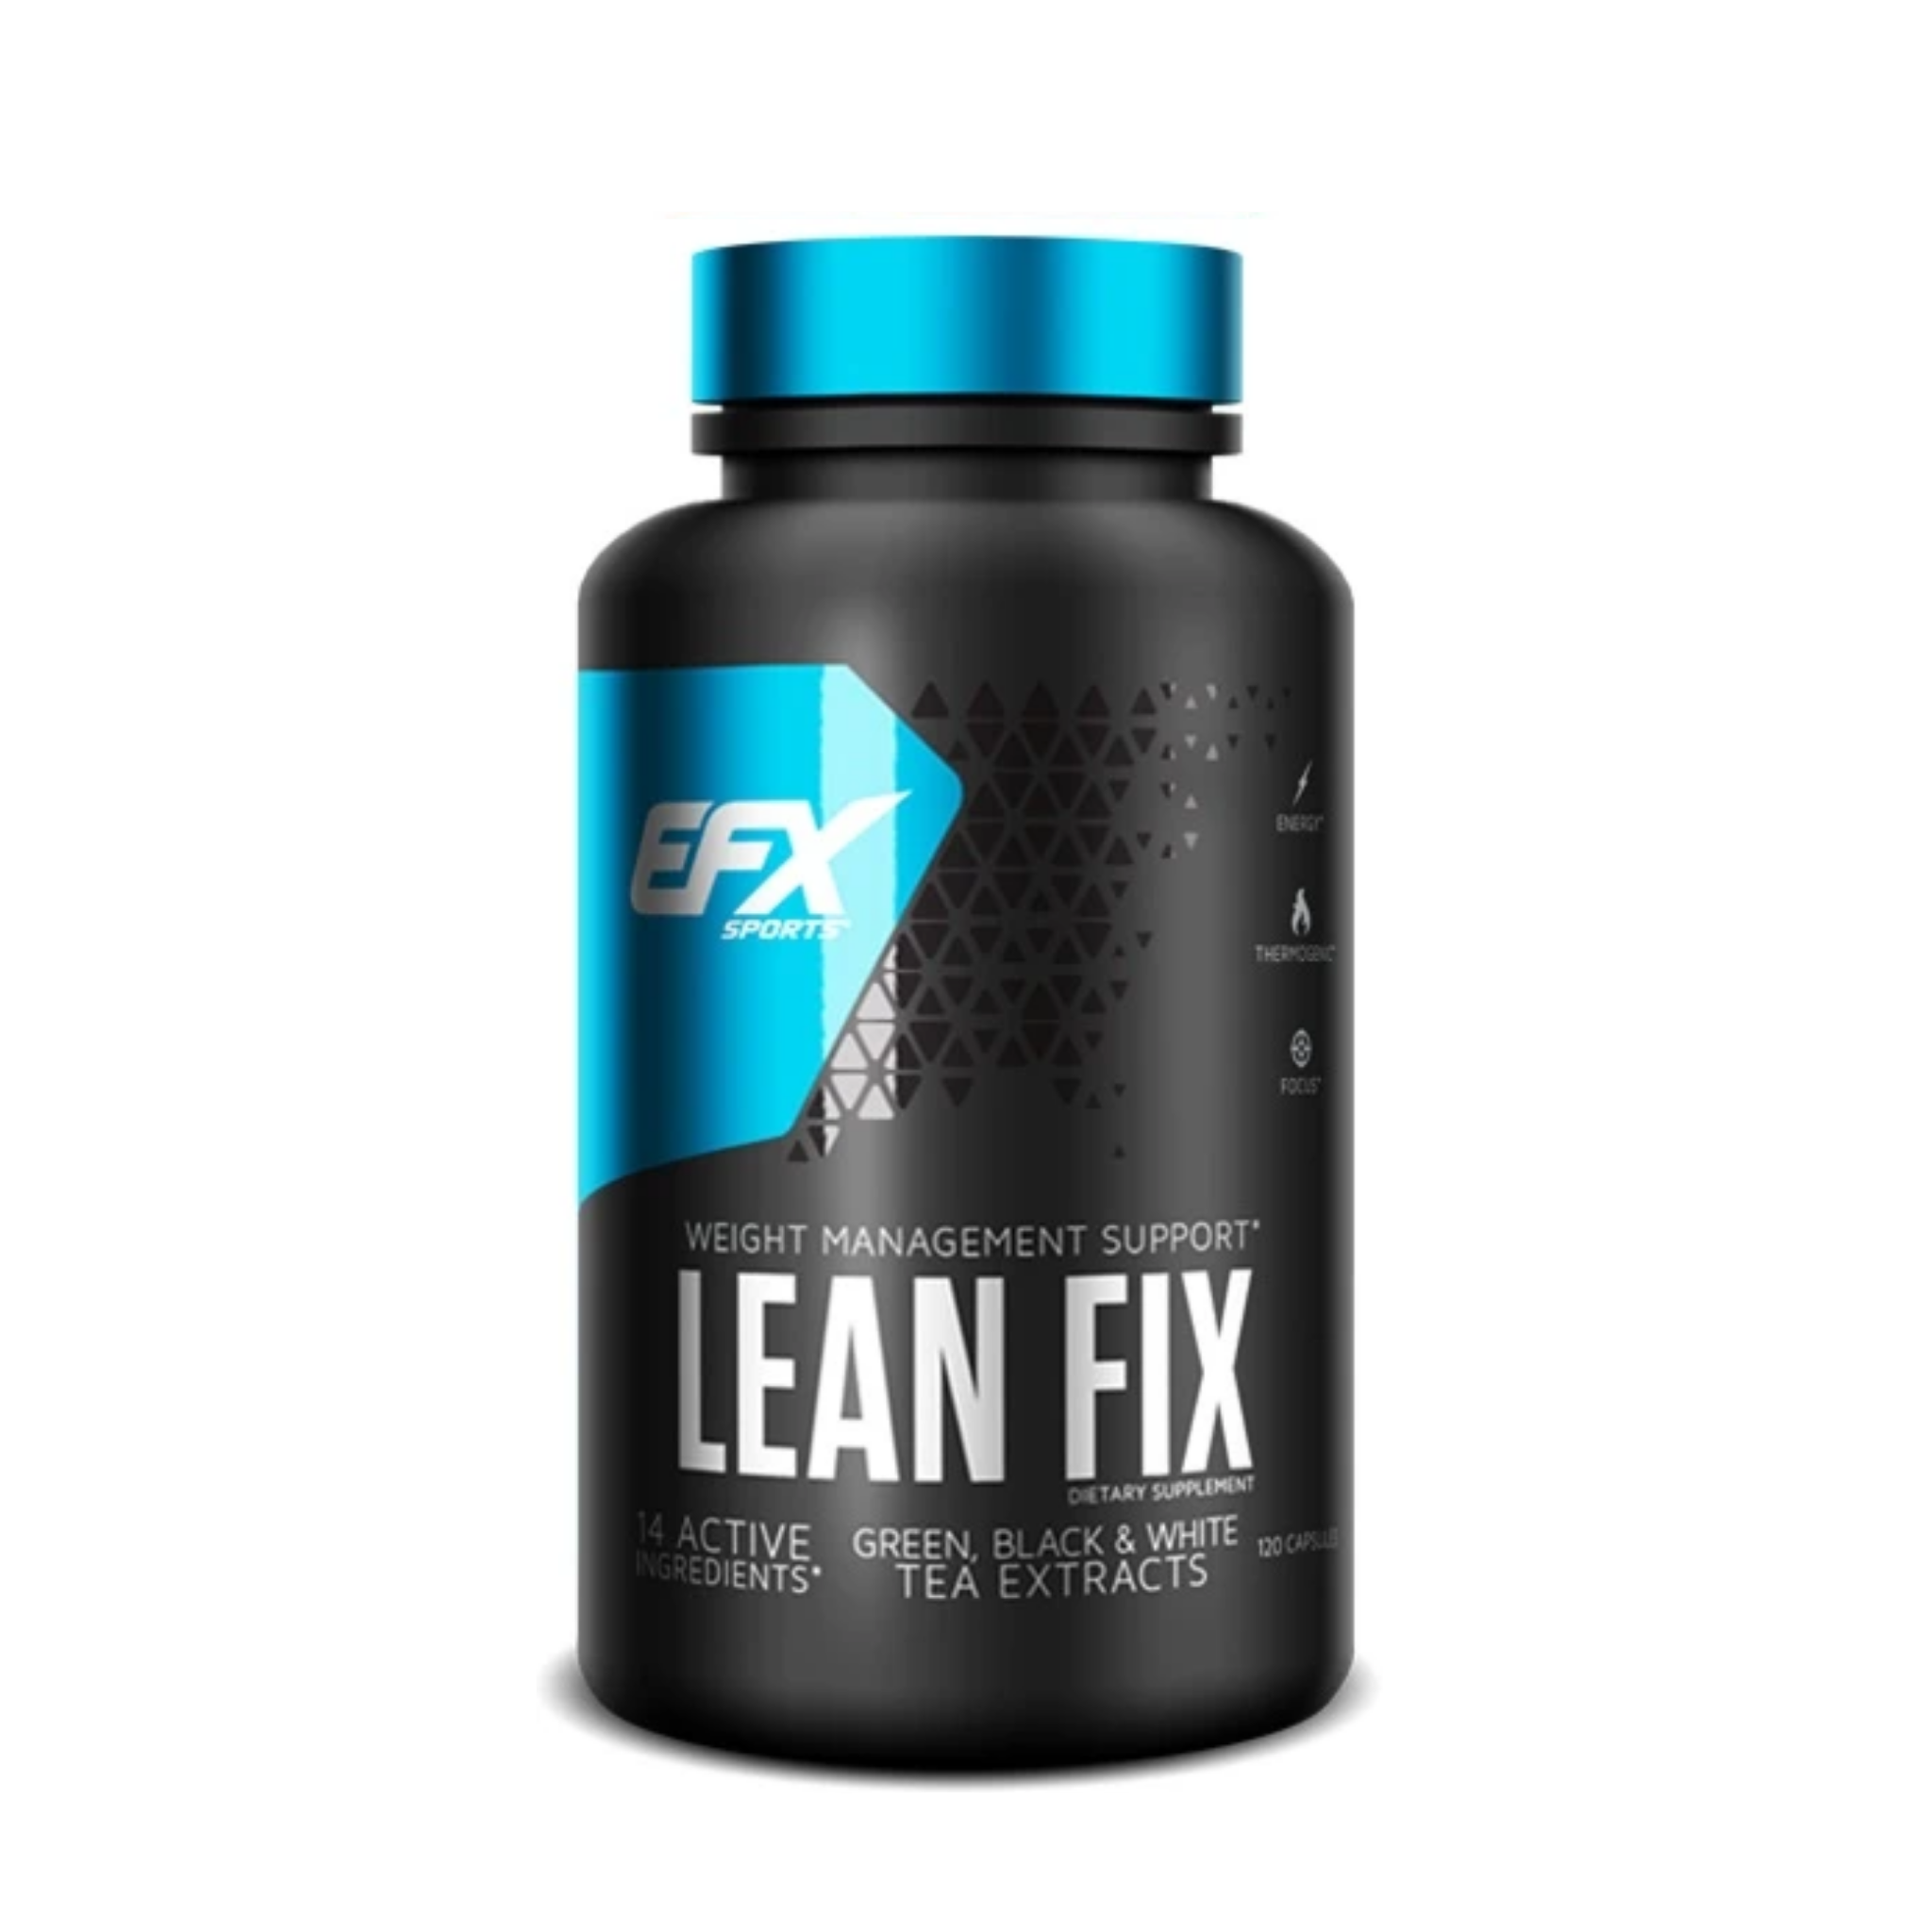 EFX Sports Lean Fix